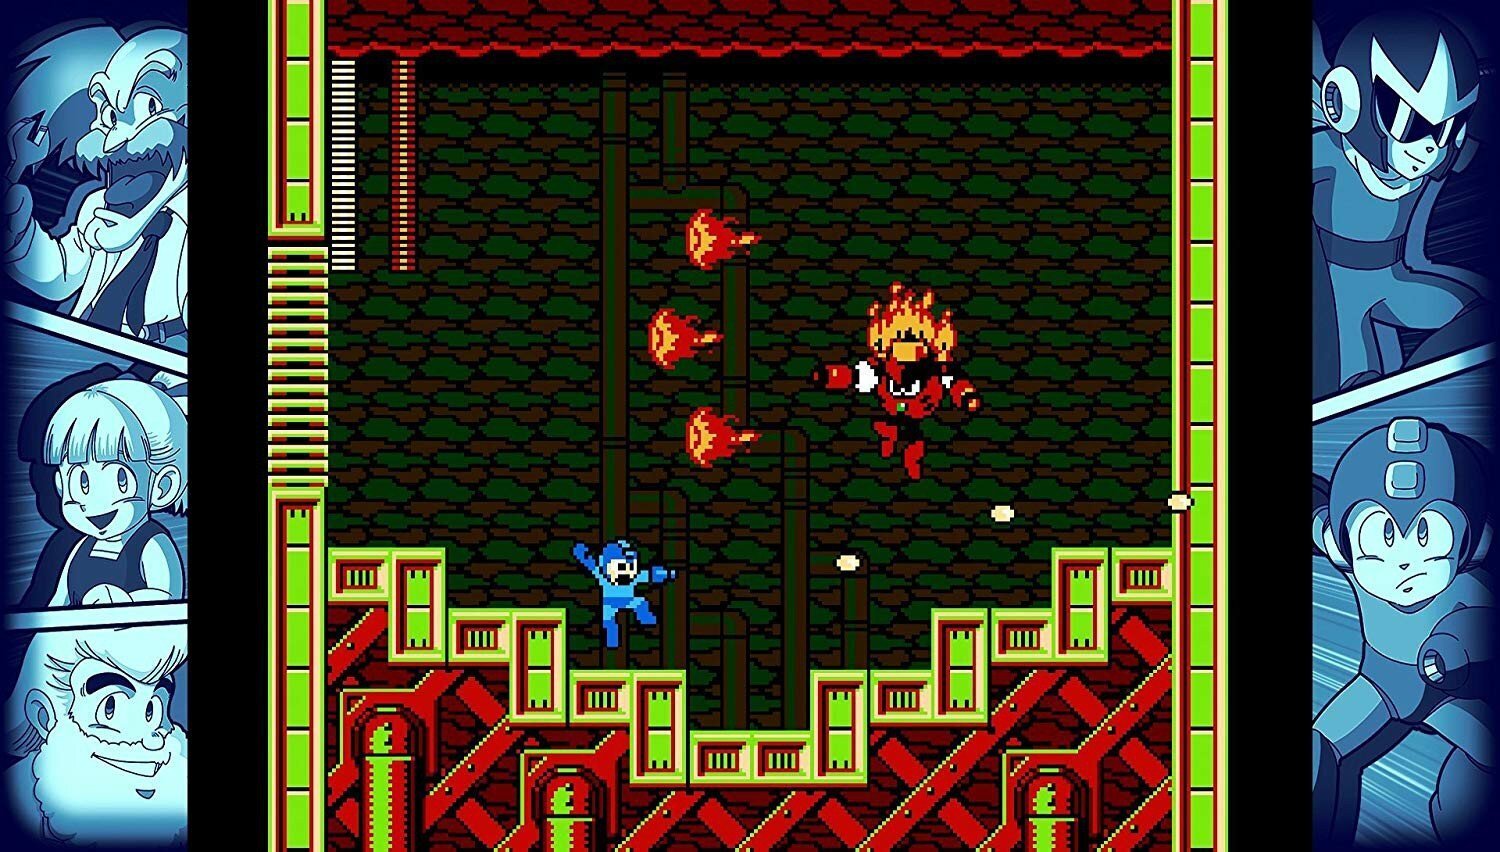 Mega Man Legacy Collection 2 PS4 cena un informācija | Datorspēles | 220.lv